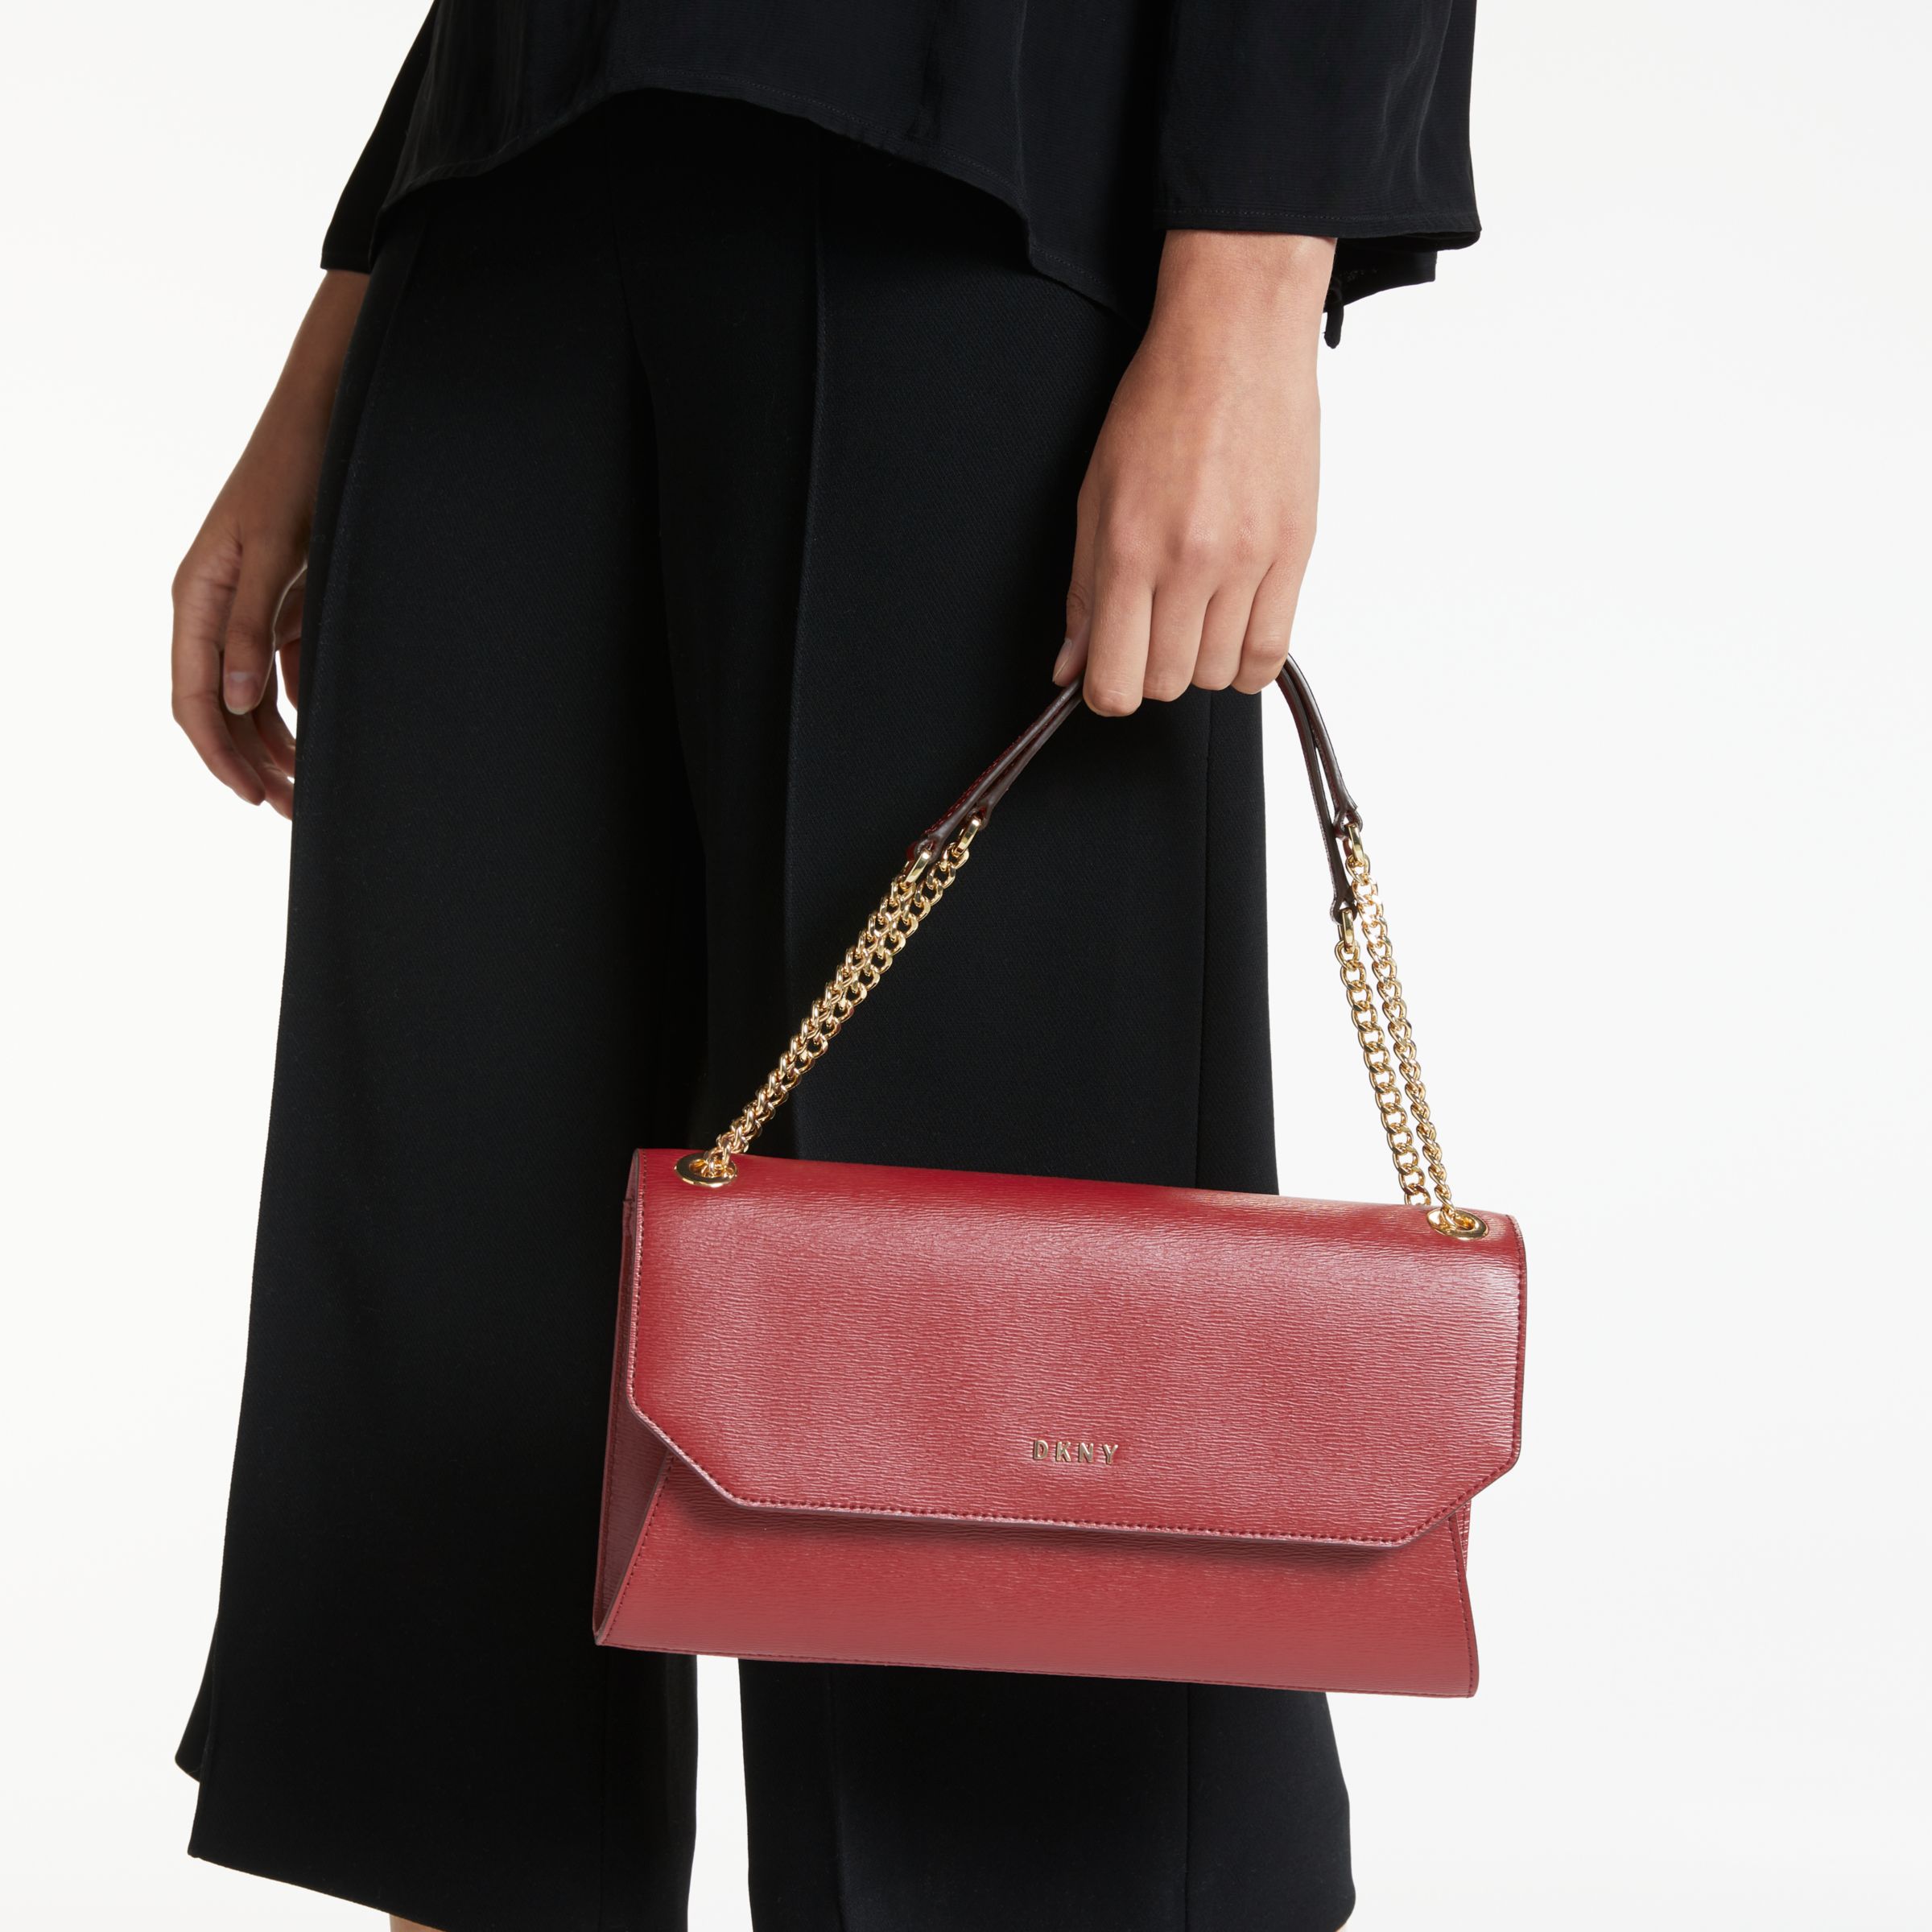 DKNY Sutton Leather Envelope Clutch Bag, Scarlet at John Lewis & Partners